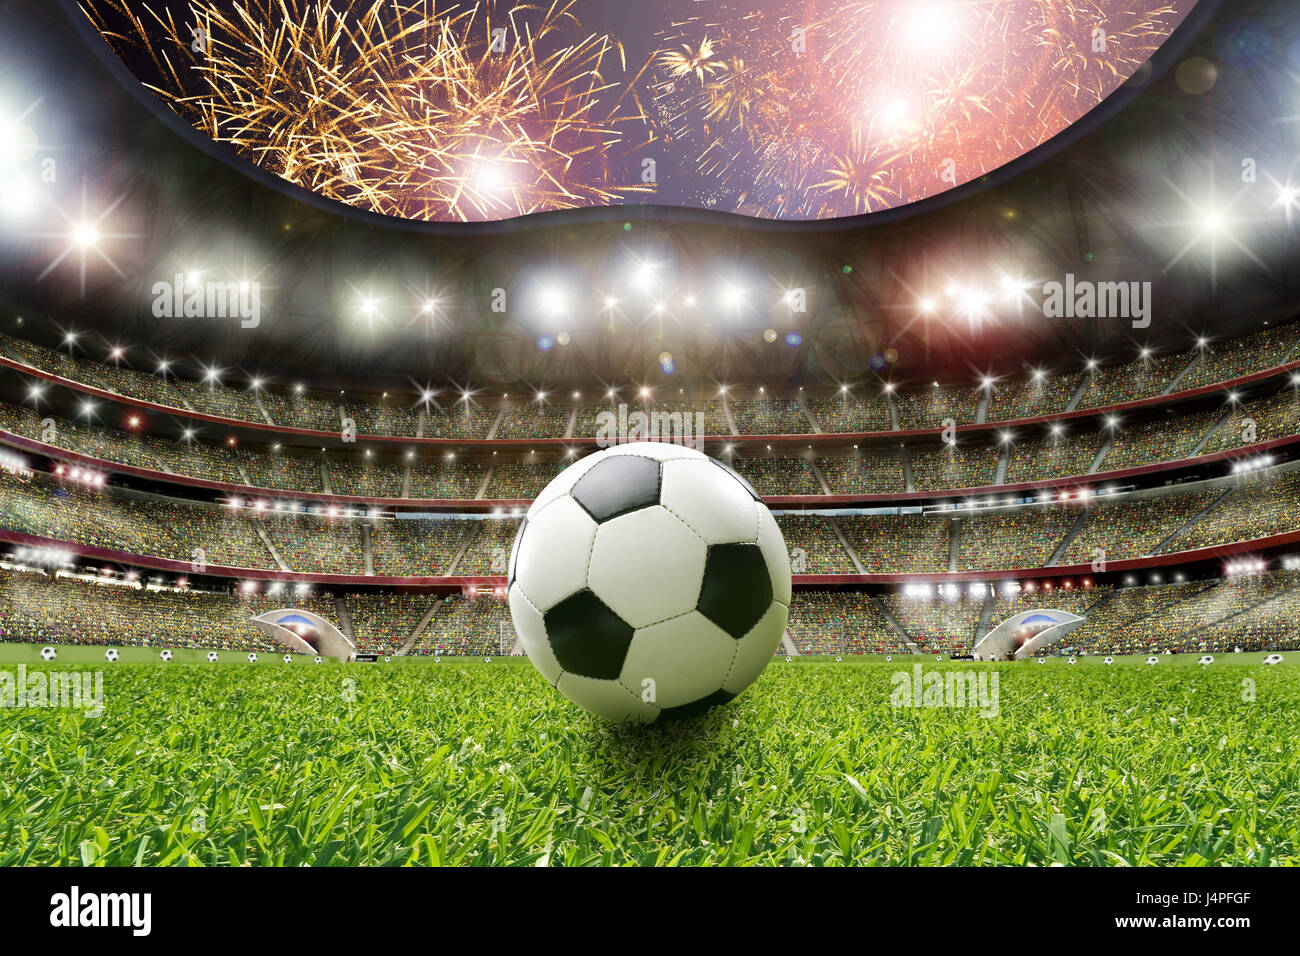 Football stadium, turf, ball, spectator's stand, fireworks, Stock Photo